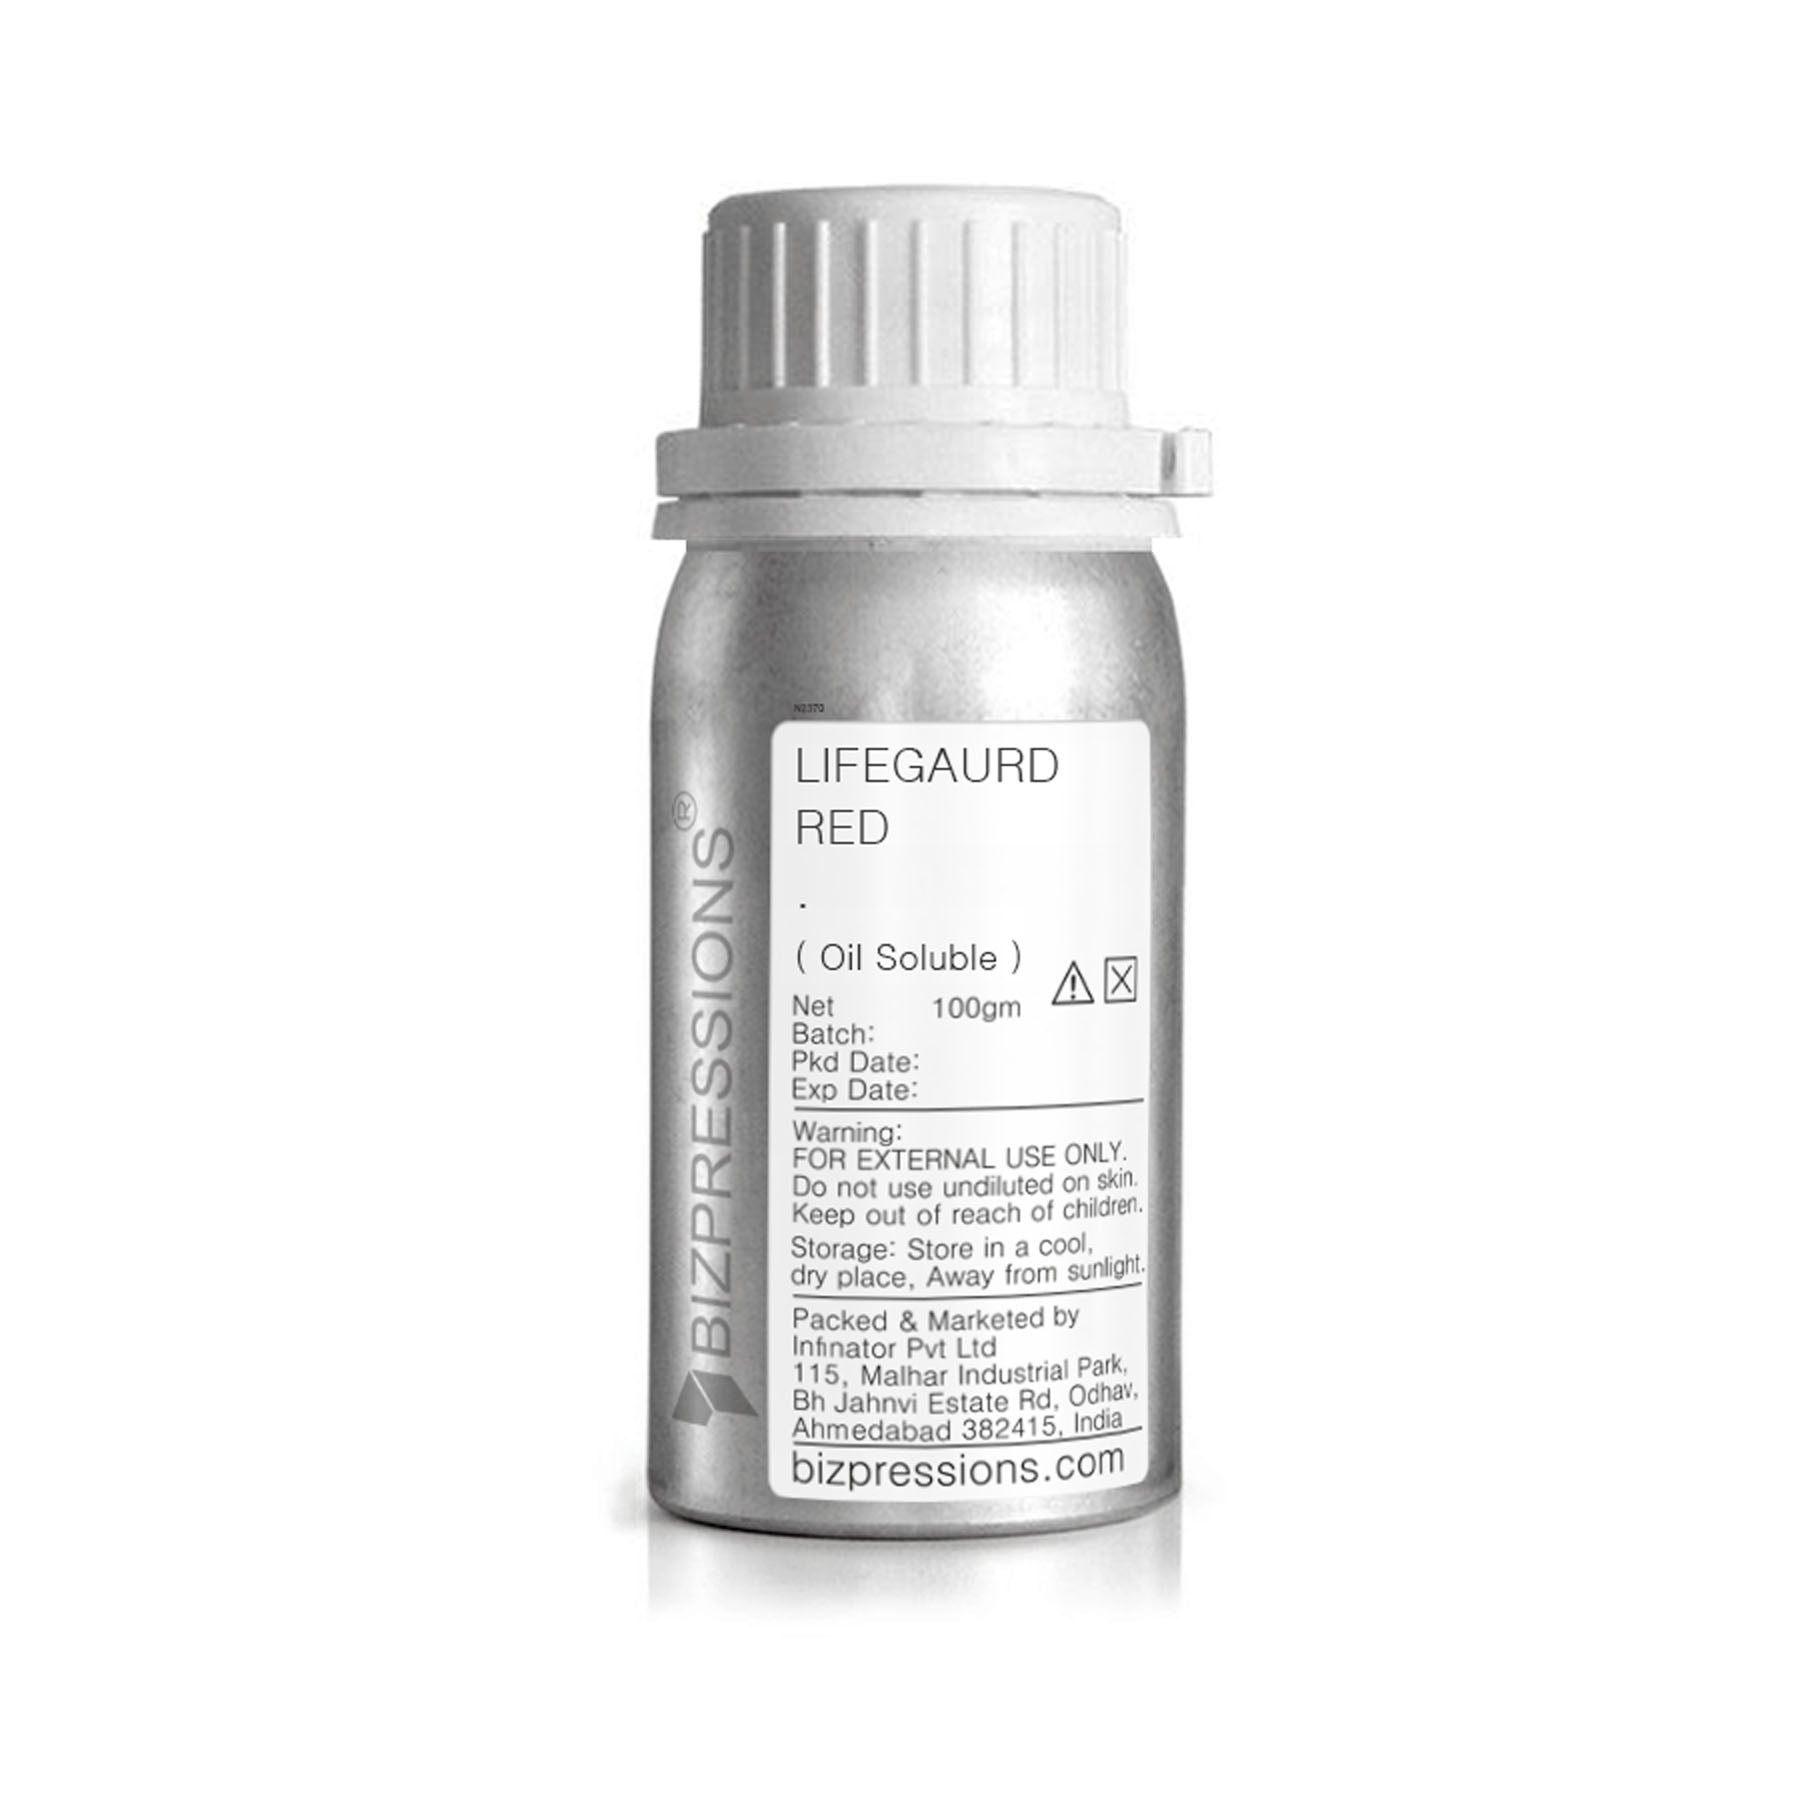 LIFEGAURD RED - Fragrance ( Oil Soluble ) - 100 gm